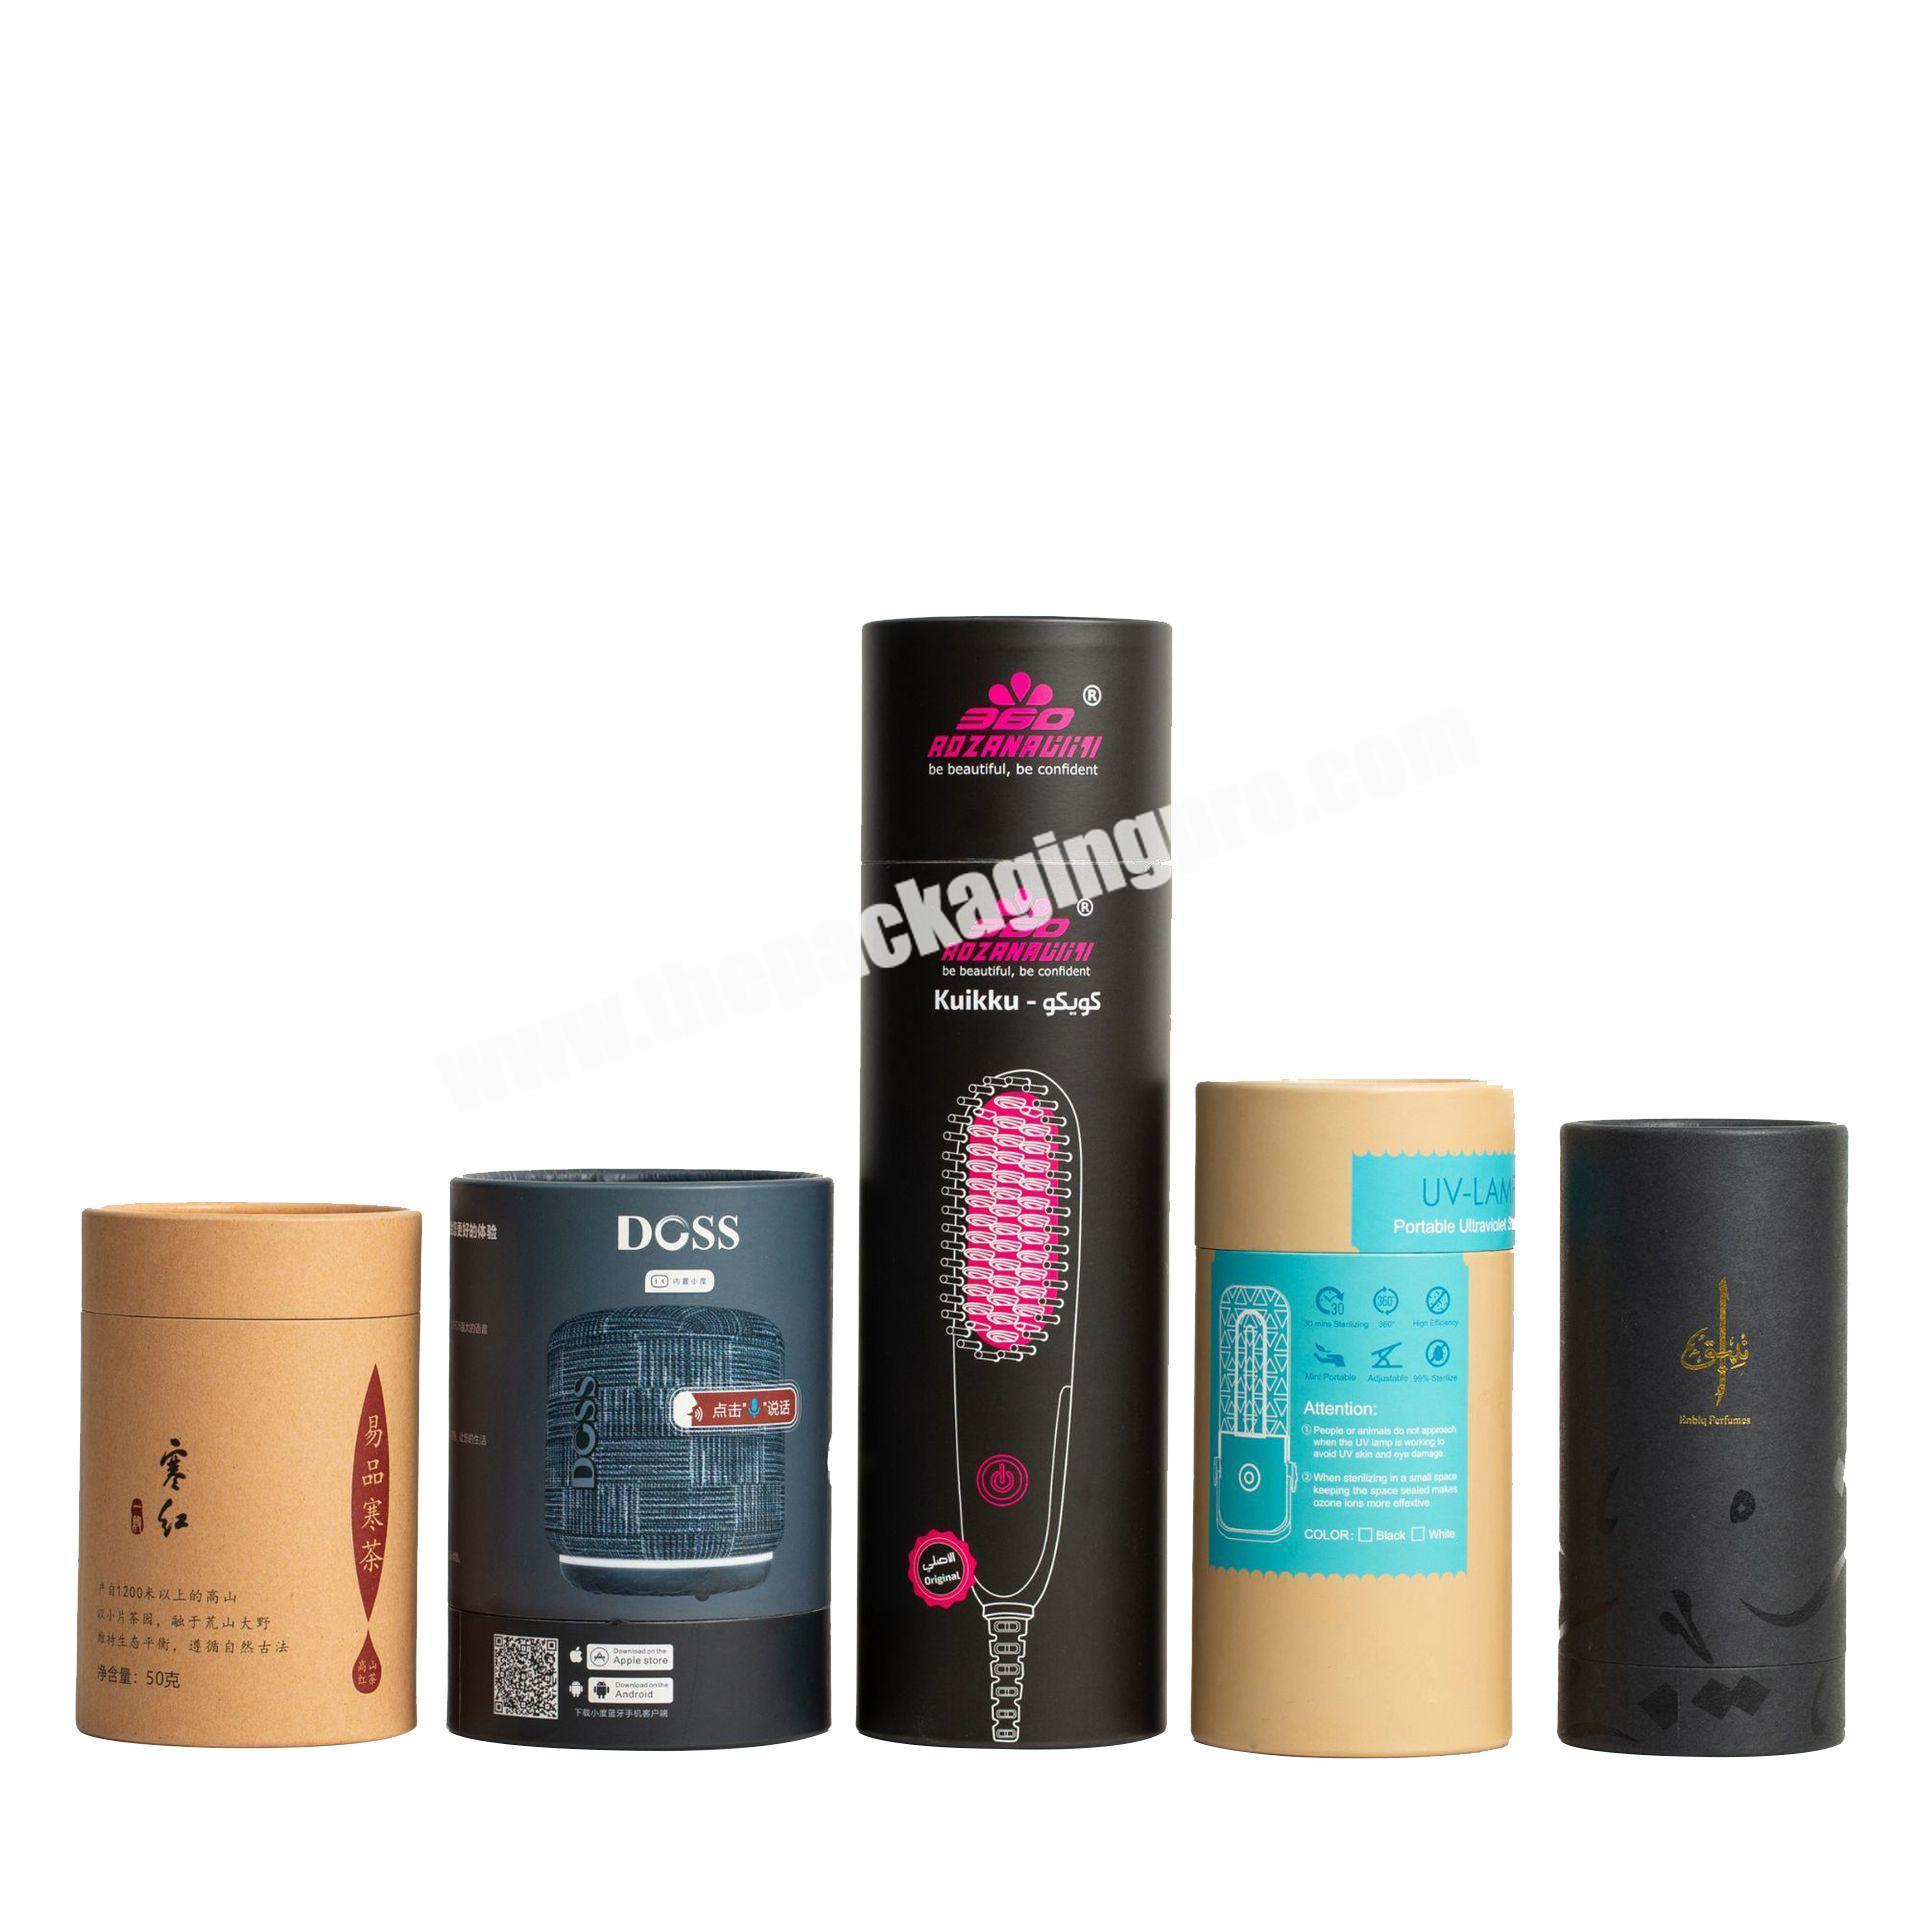 Premium quality custom cosmetics skincare cardboard cylinder box luxury essential oil paper tube packaging